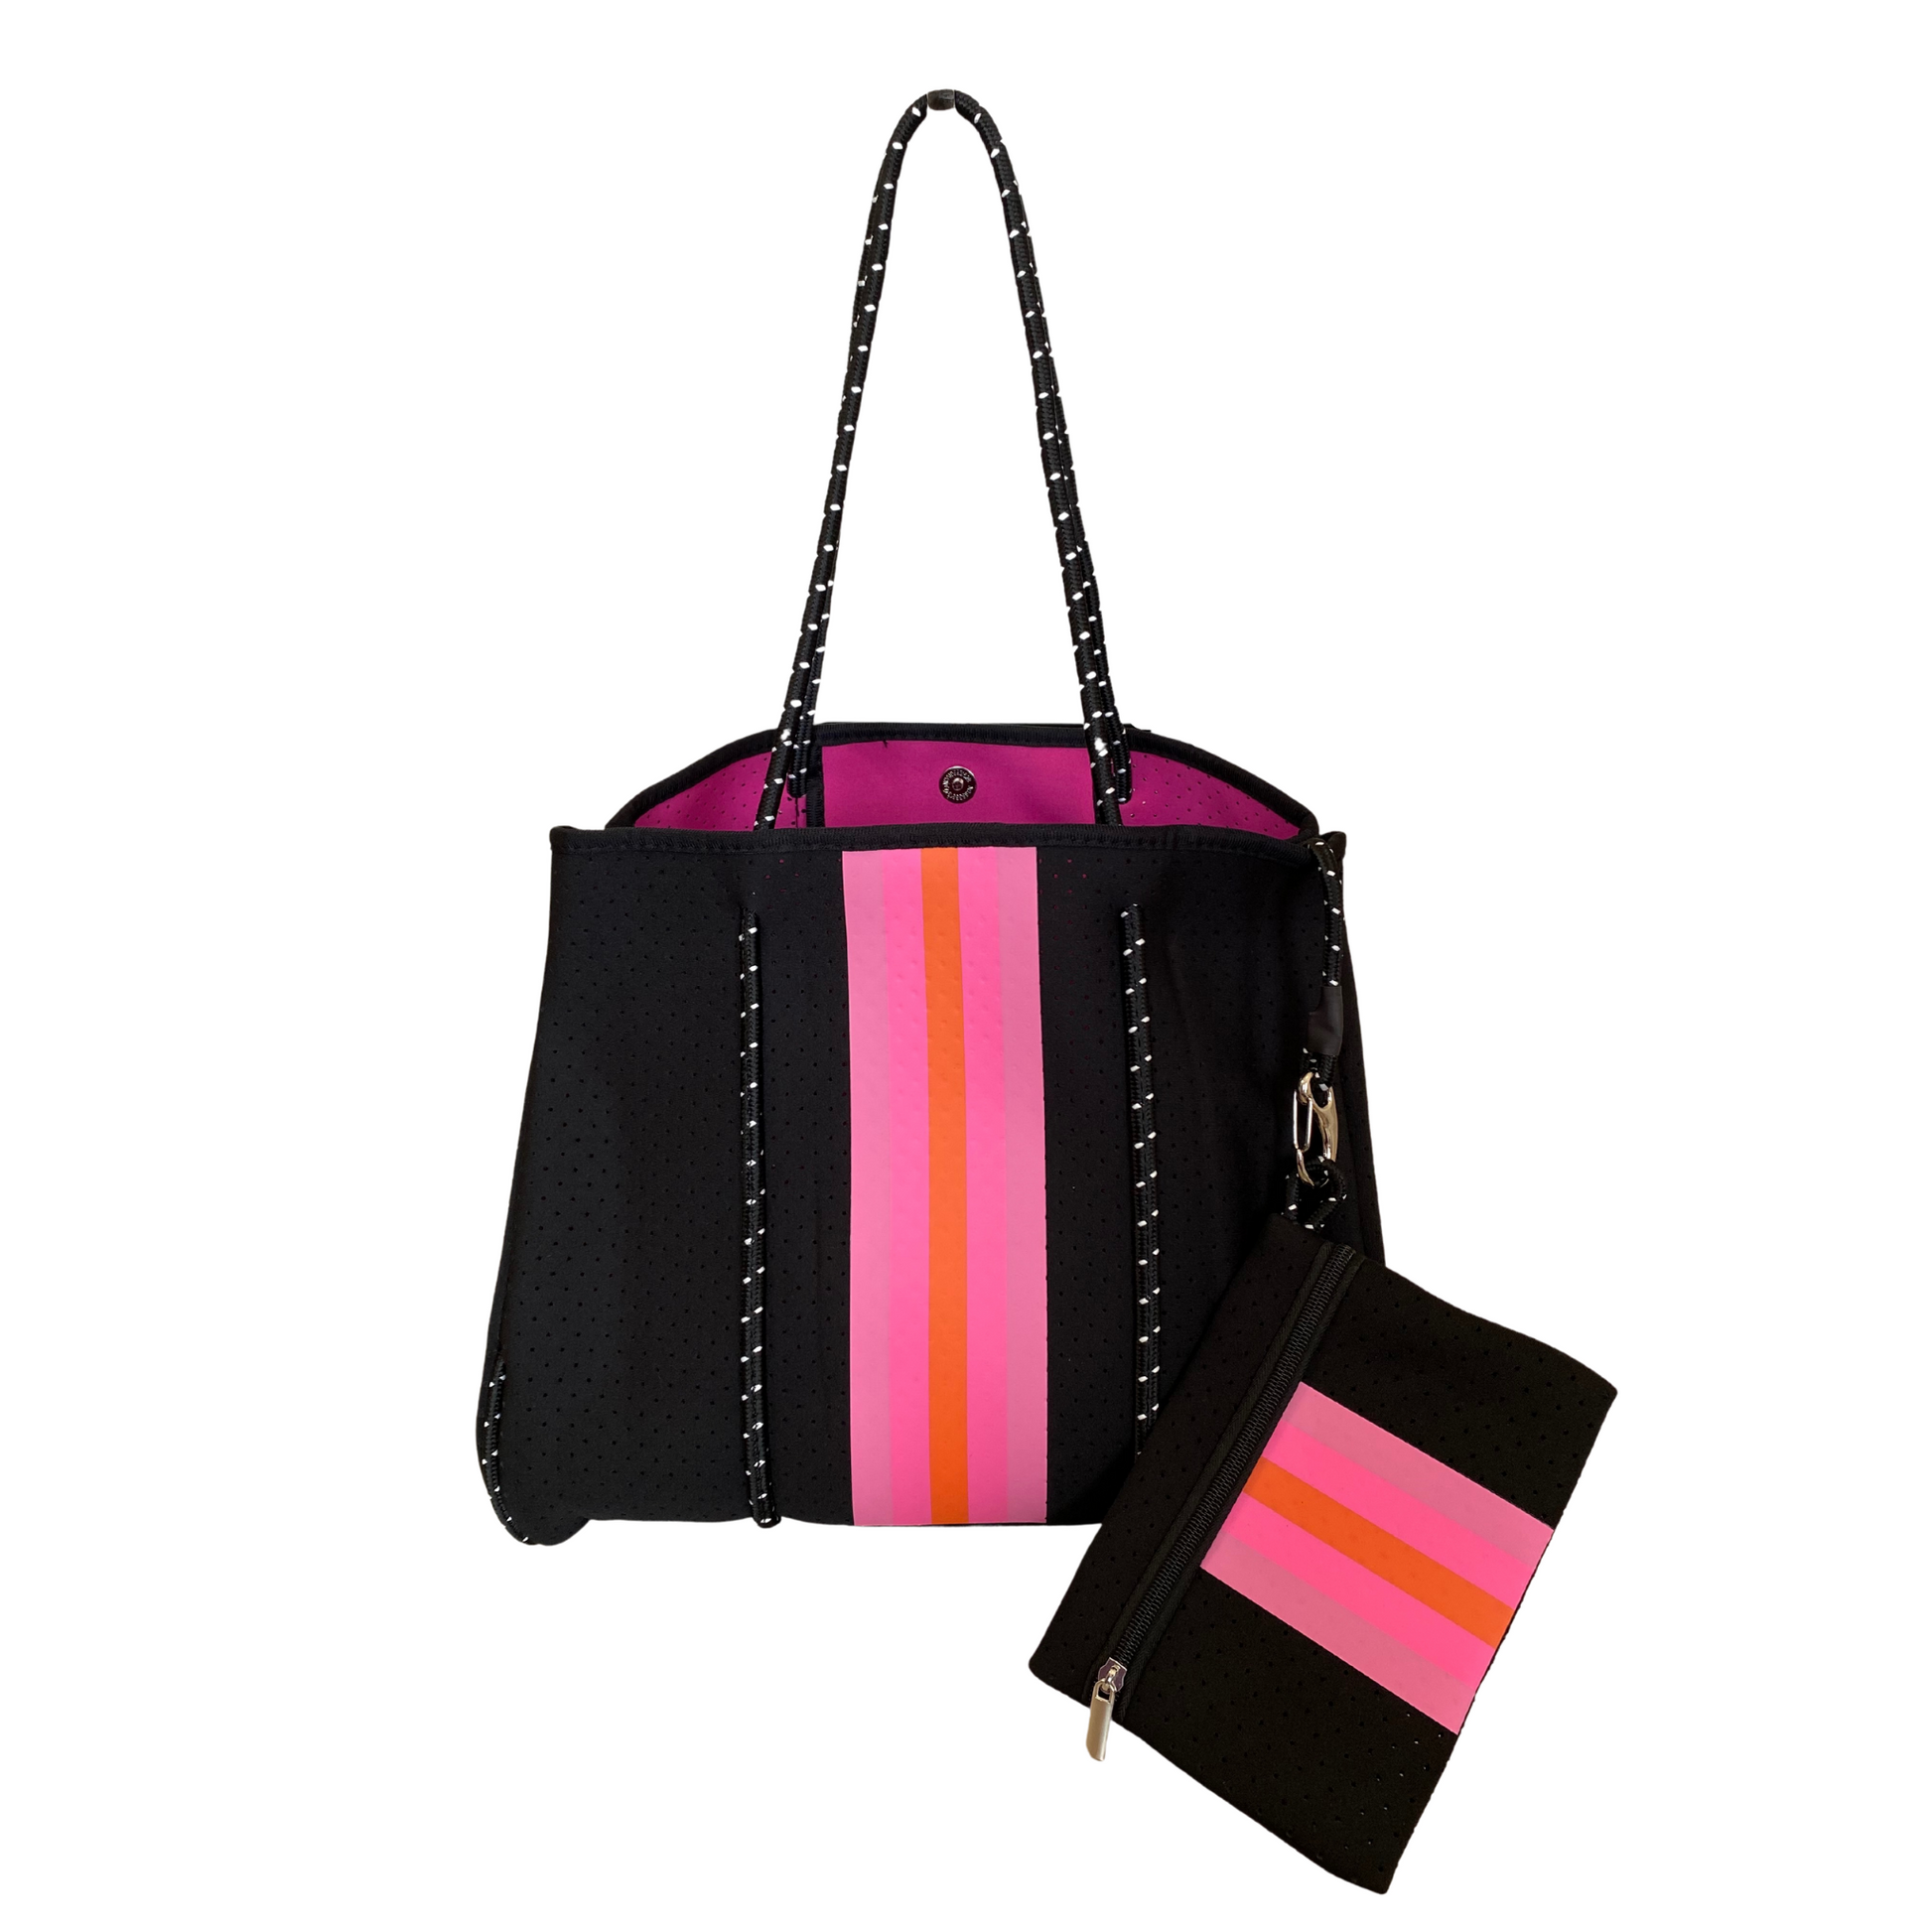 Black and Pink Neoprene Tote Bag, Neoprene Tote Bag, Neoprene Tote, Neoprene Bag, Travel Bag, Beach Tote, Beach Bag, Bag, Neoprene Accessories, Accessories